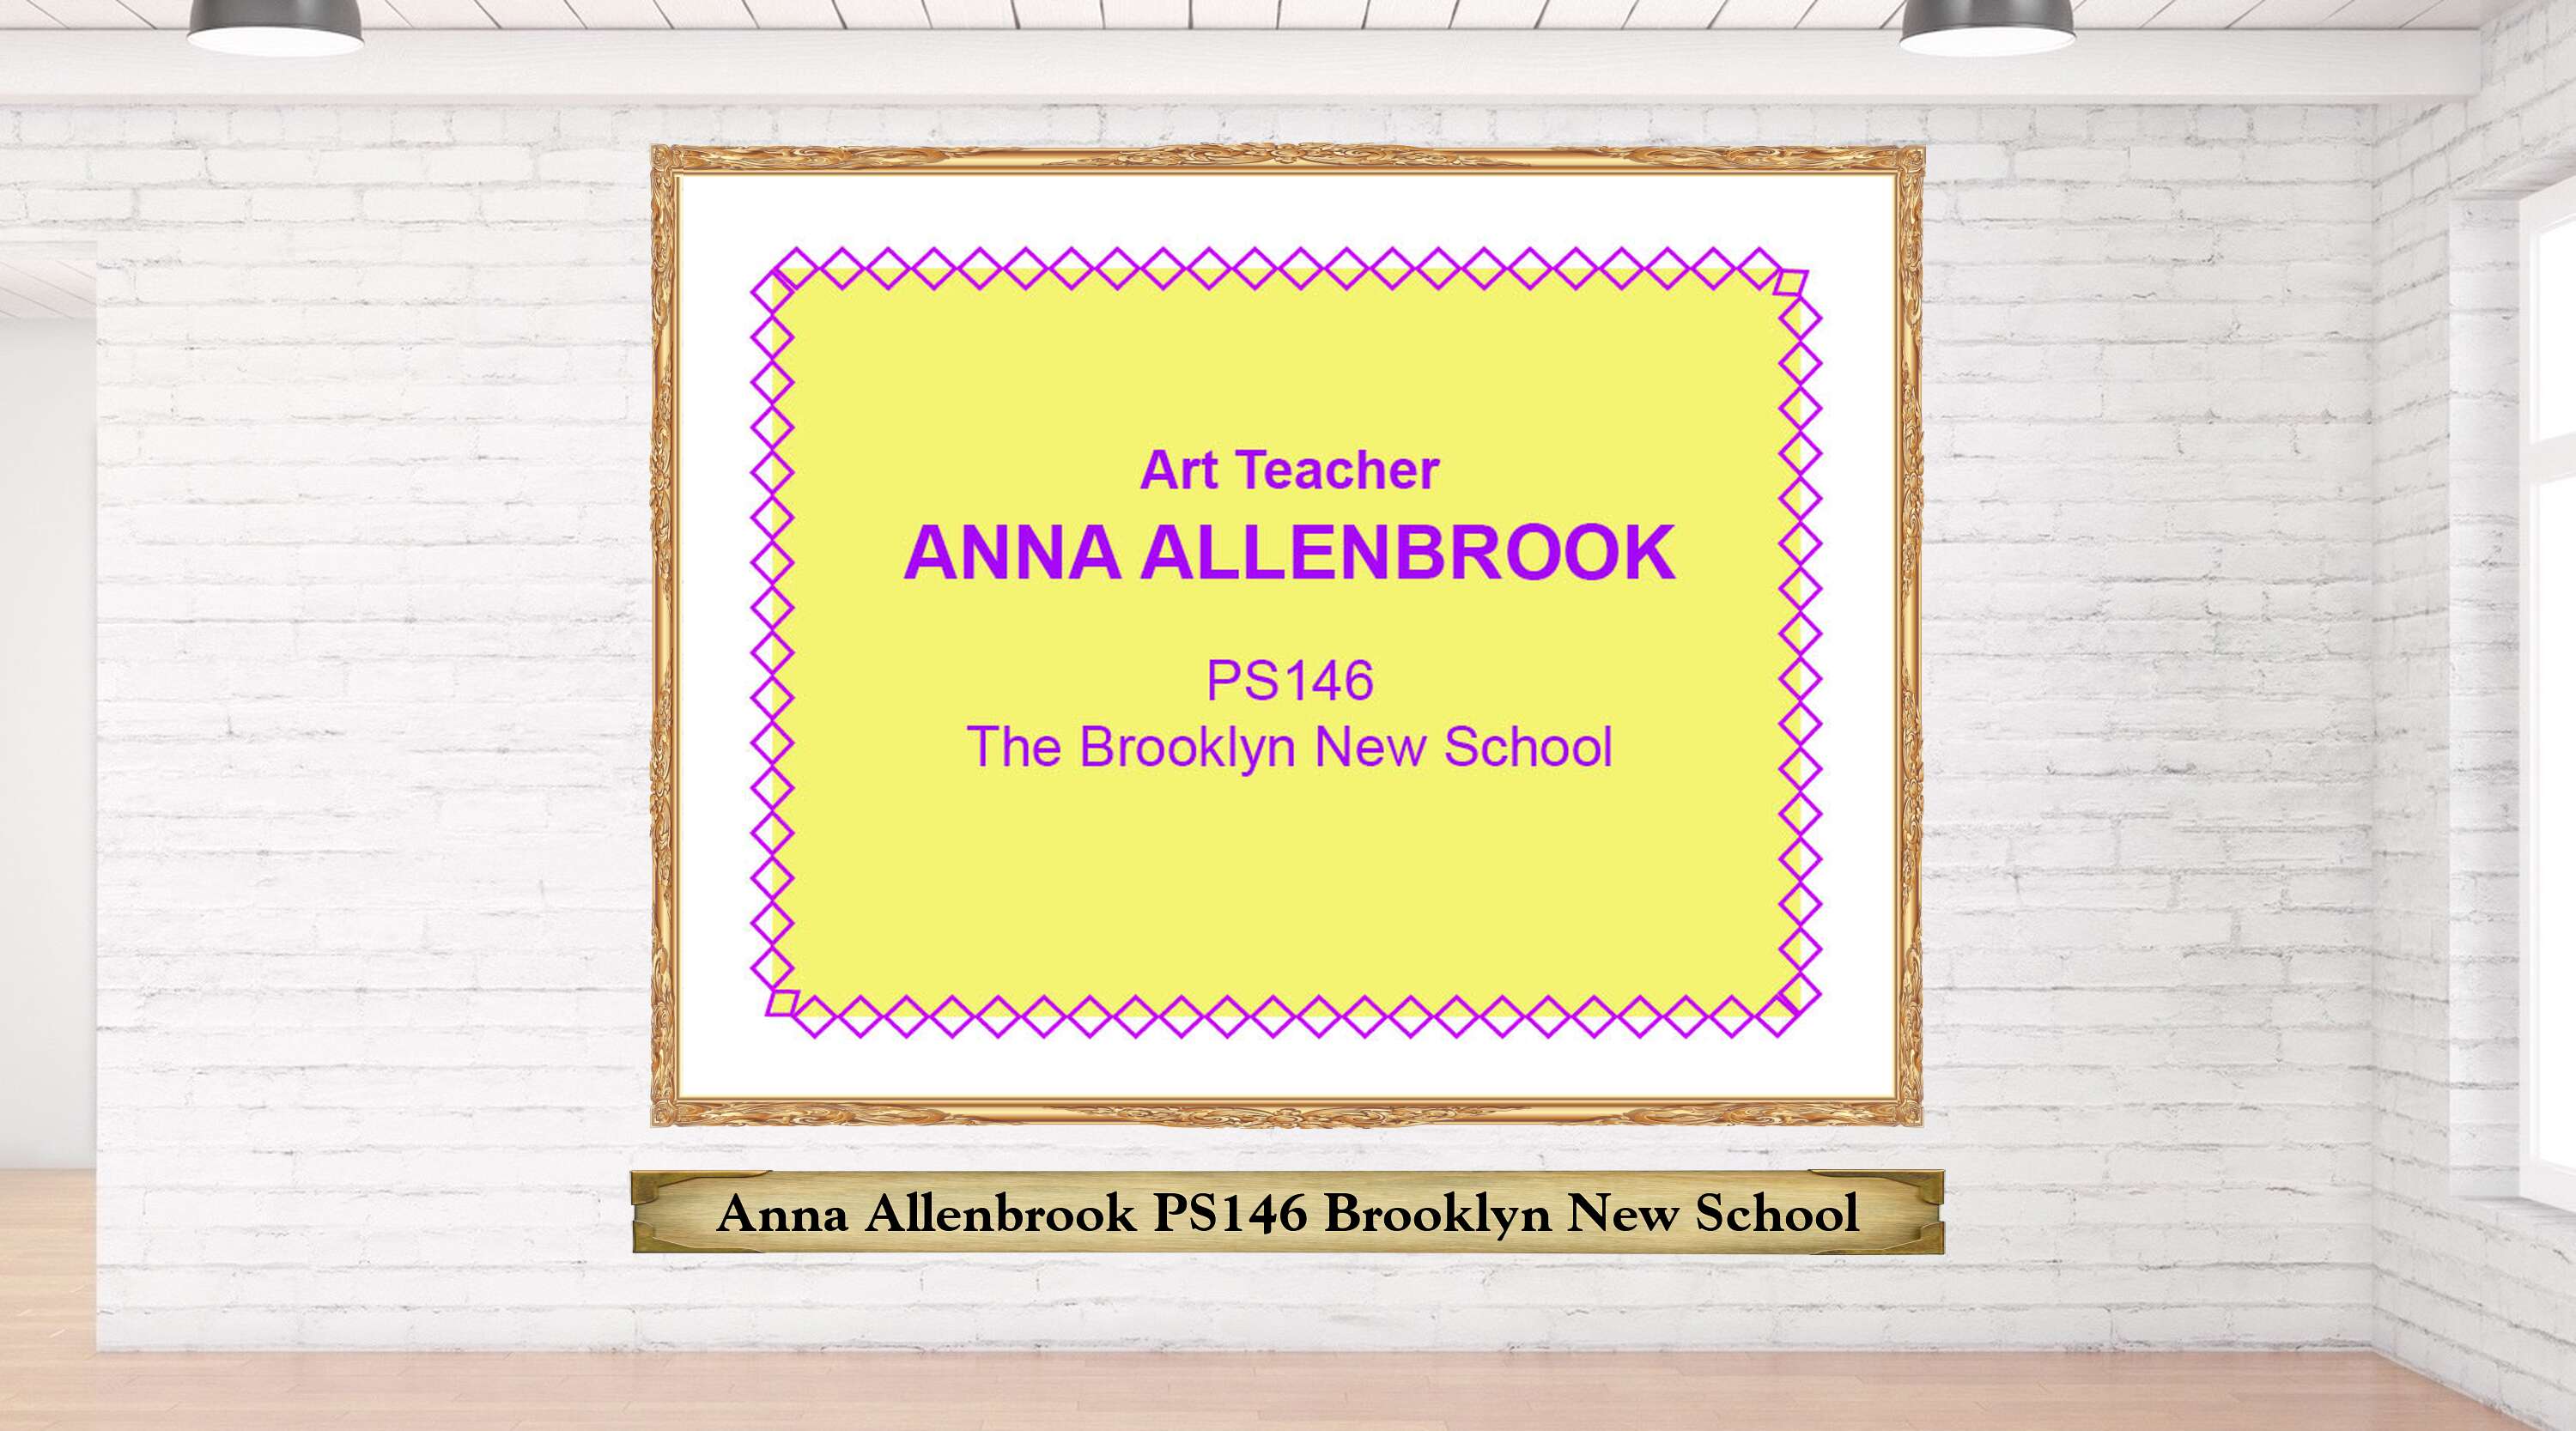 Anna Allenbrook PS146 Brooklyn New School